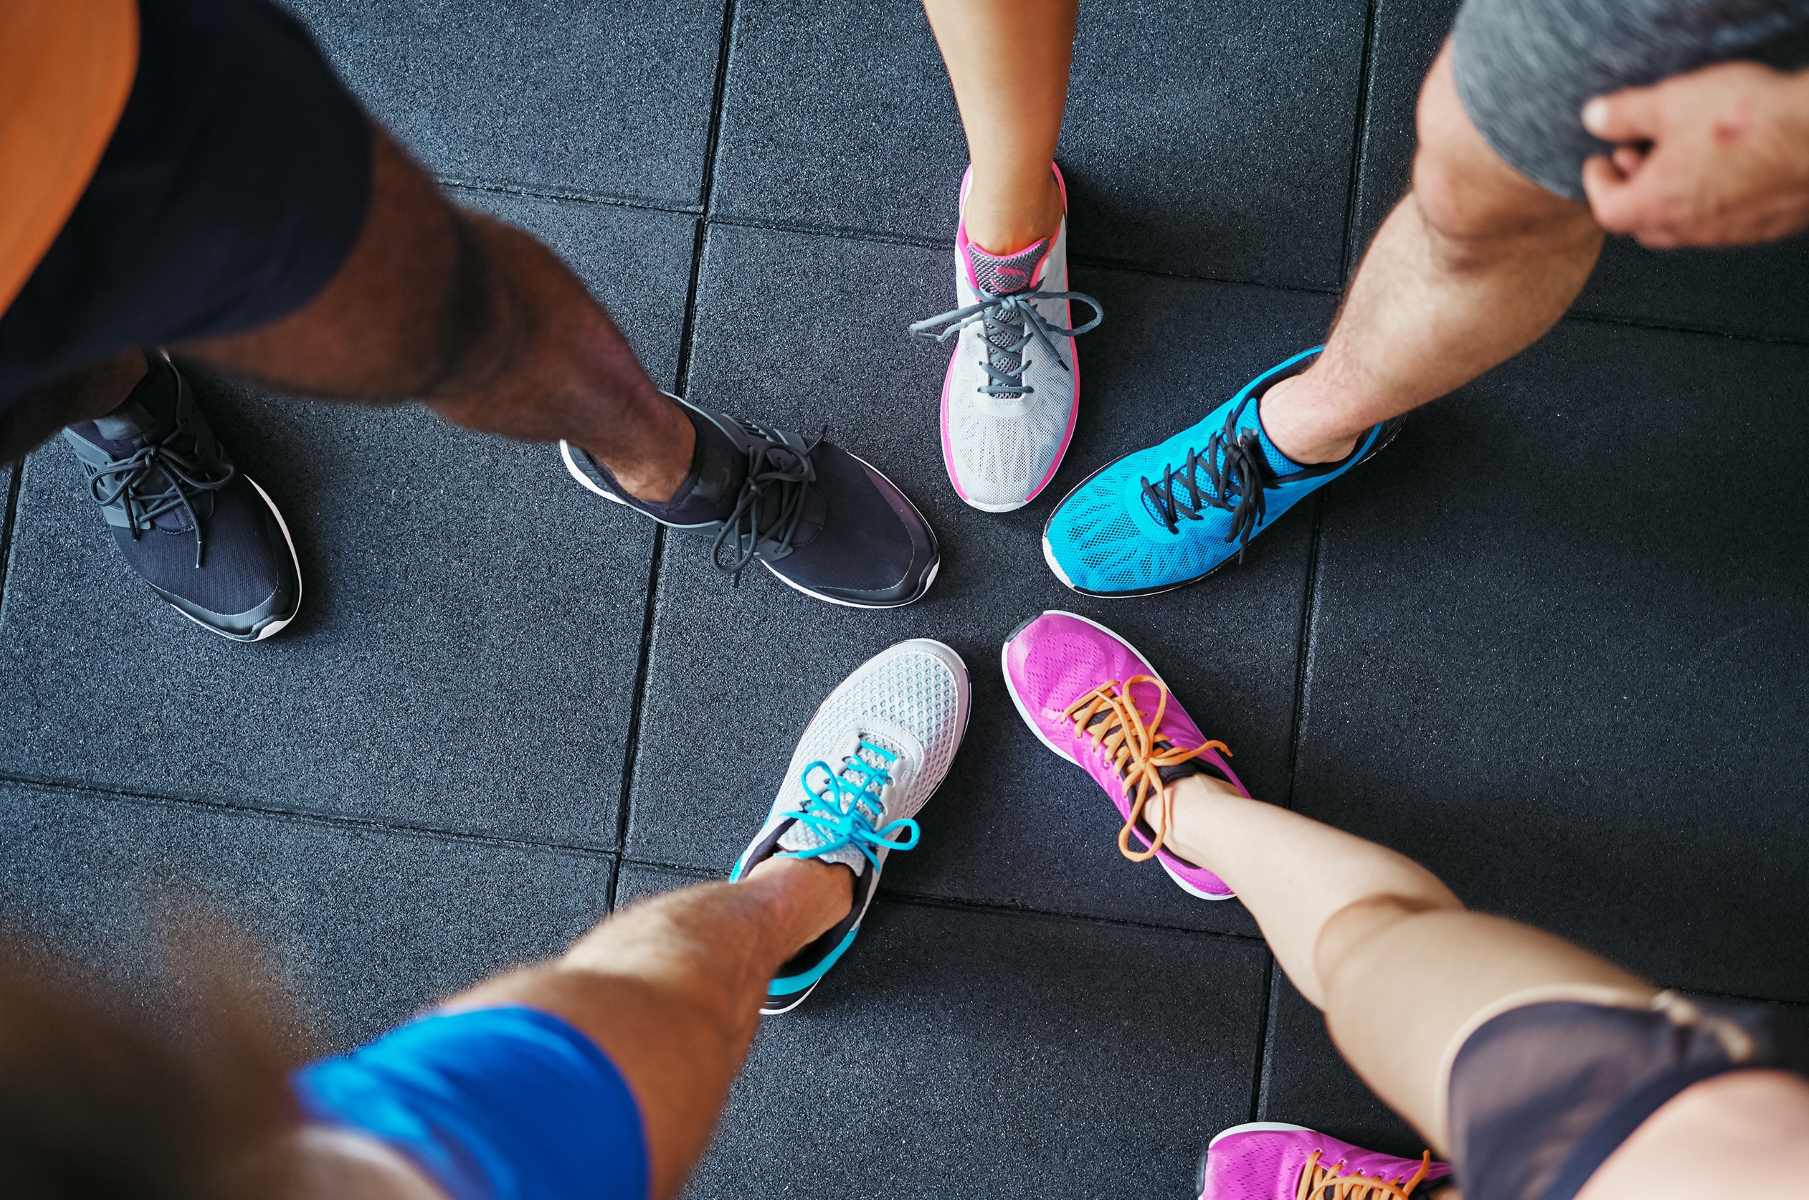 19 Runners Share Their Inspiring Reasons For Running